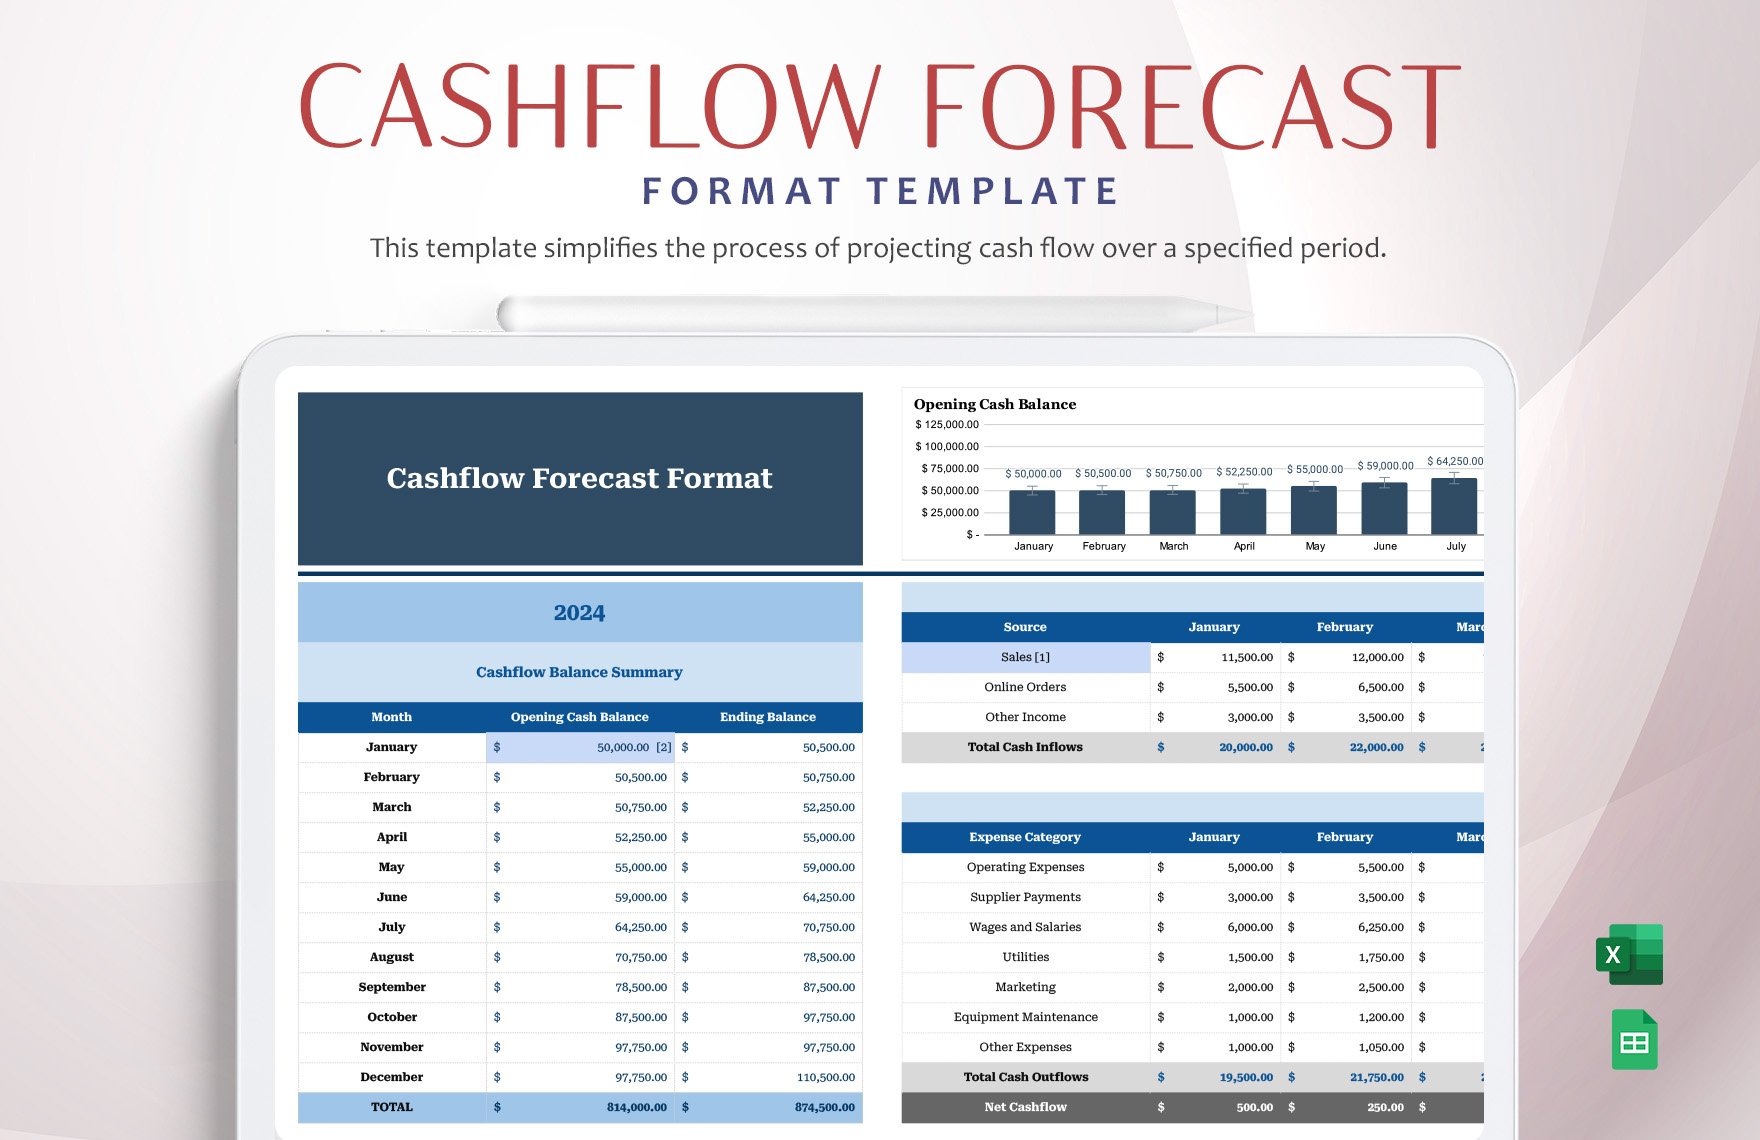 Cashflow Forecast Format Template